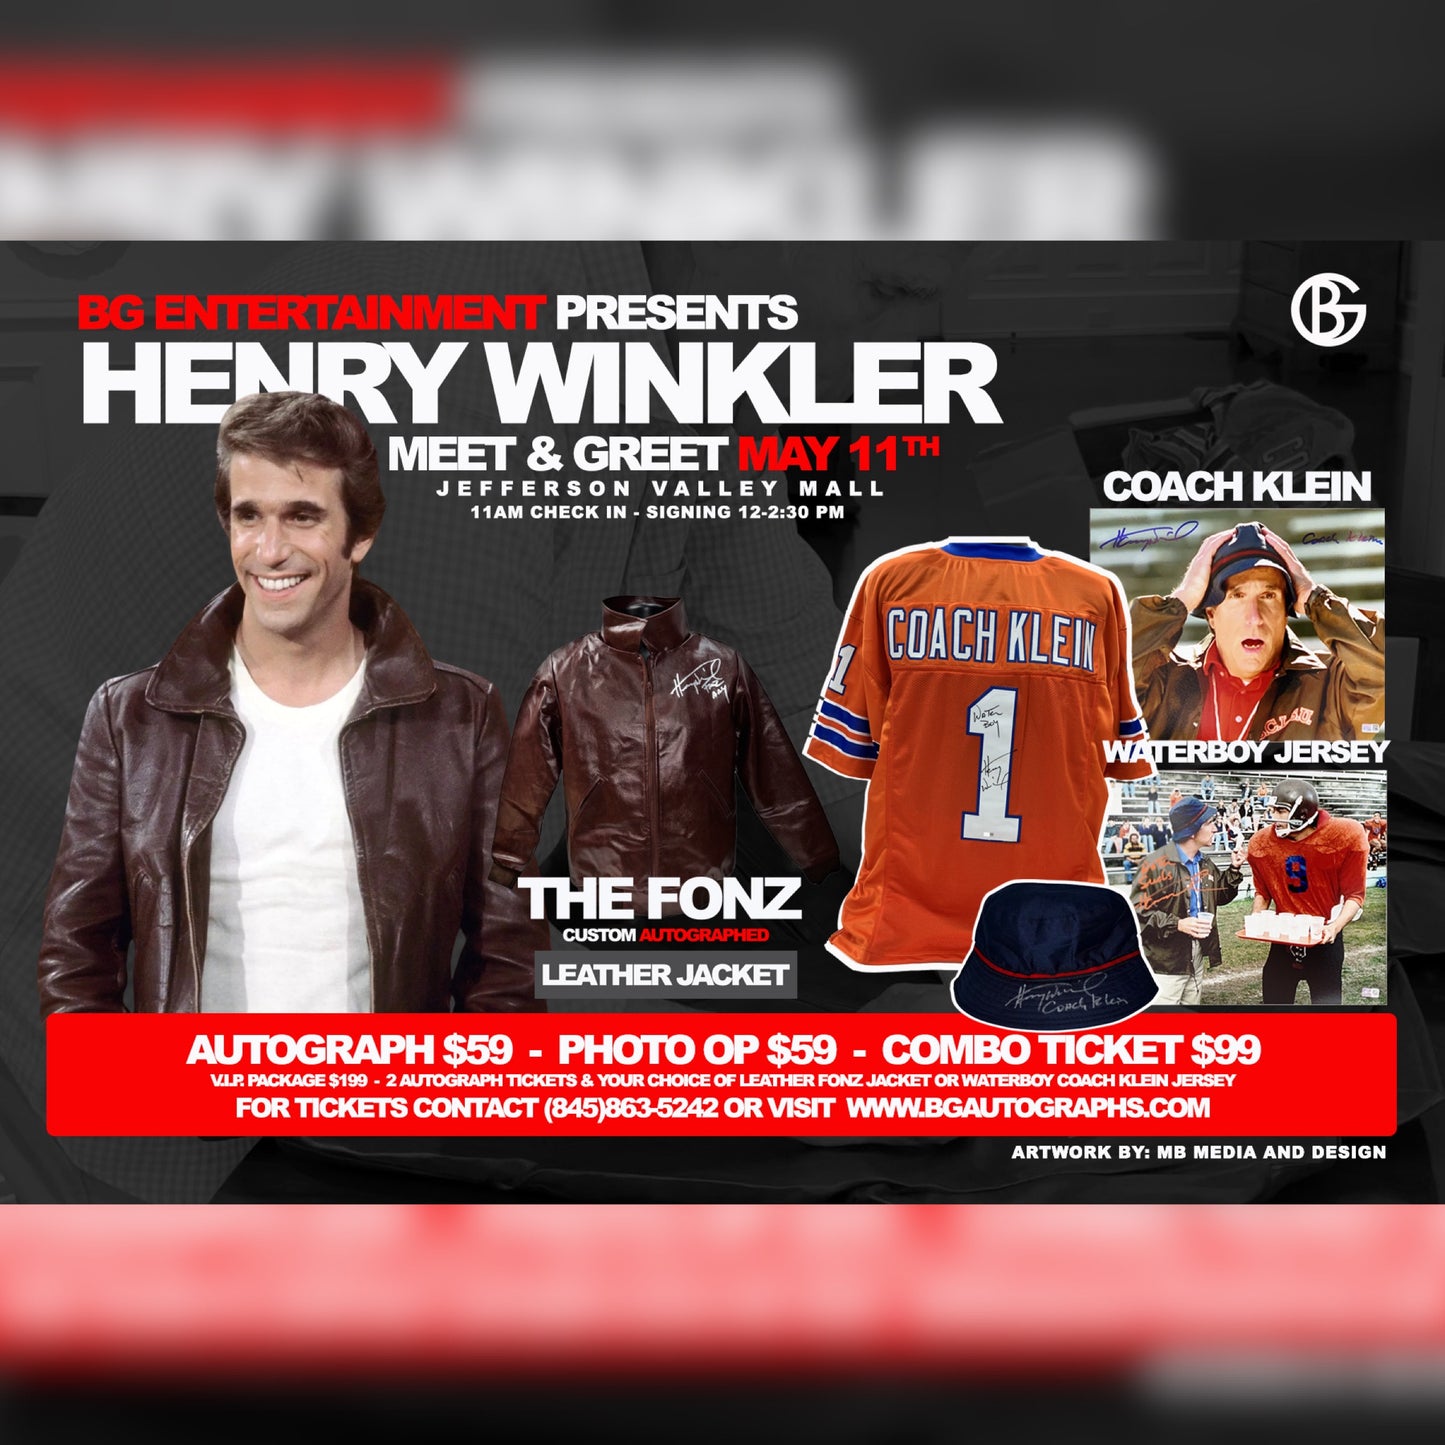 Henry Winkler Meet & Greet @ Jefferson Valley Mall - May 11th